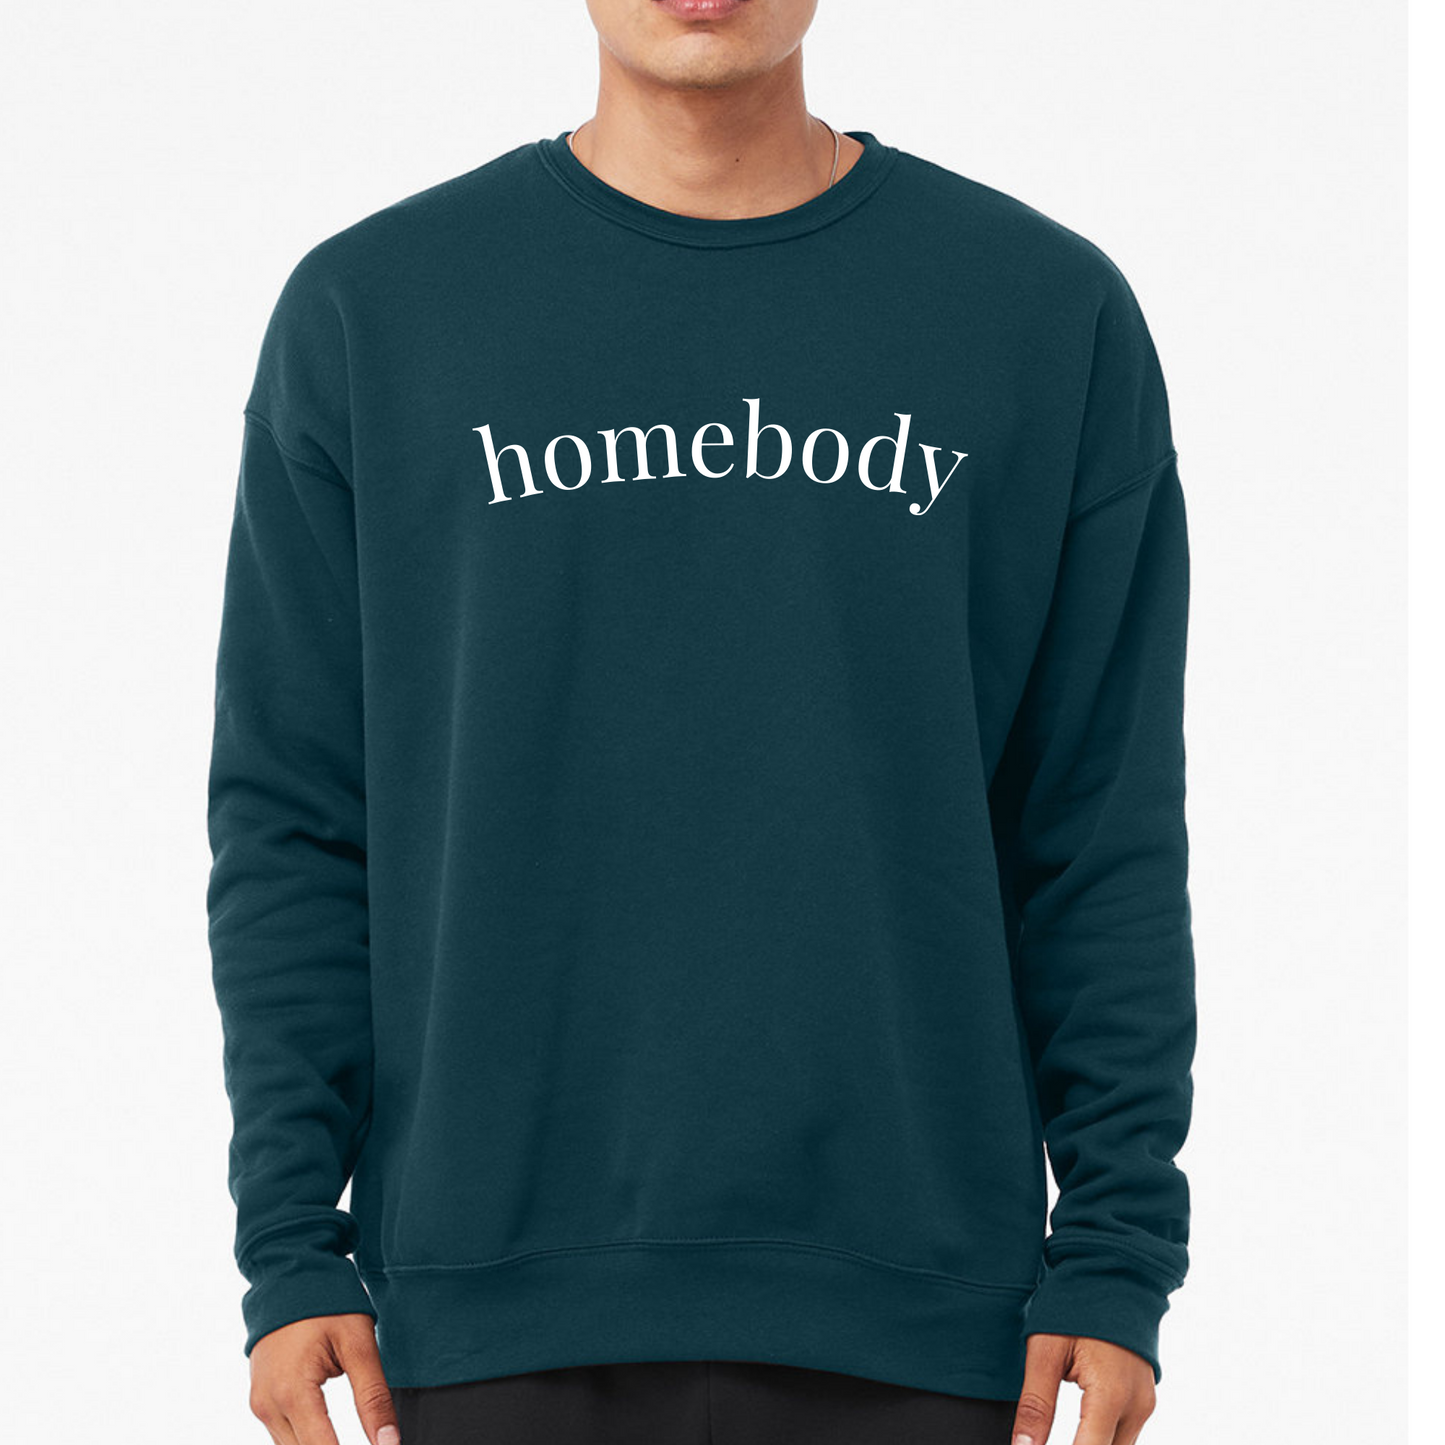 homebody | Adult Crewneck